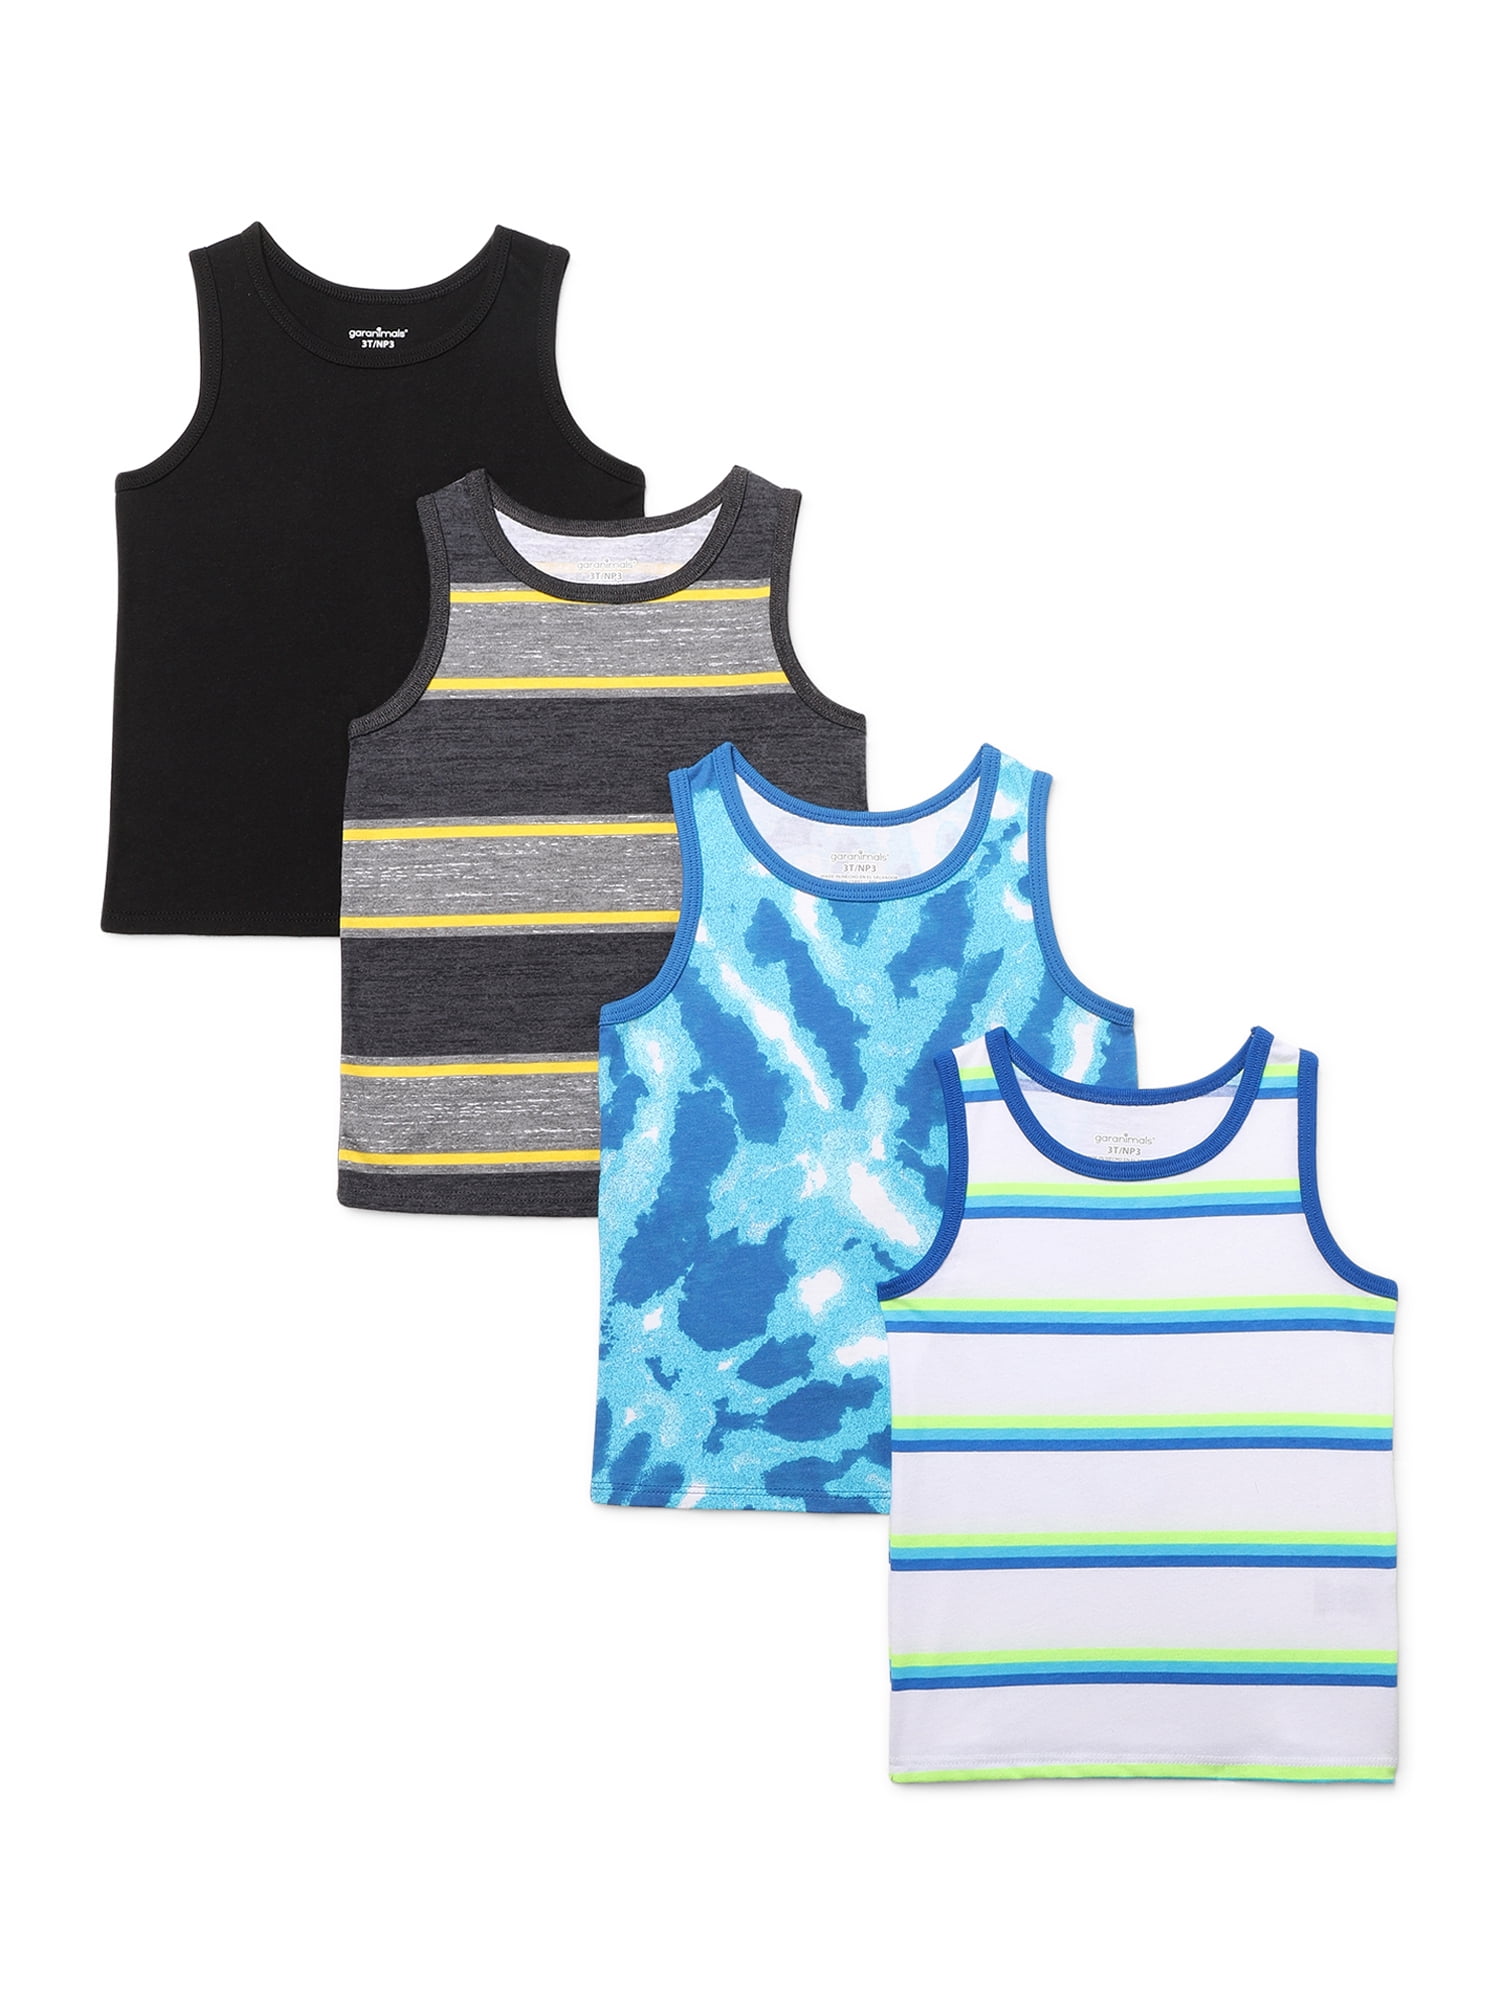 4pk Boys Tank Tops Striped Prints Designs SB NEW Undershirts Infant Toddler Kids 